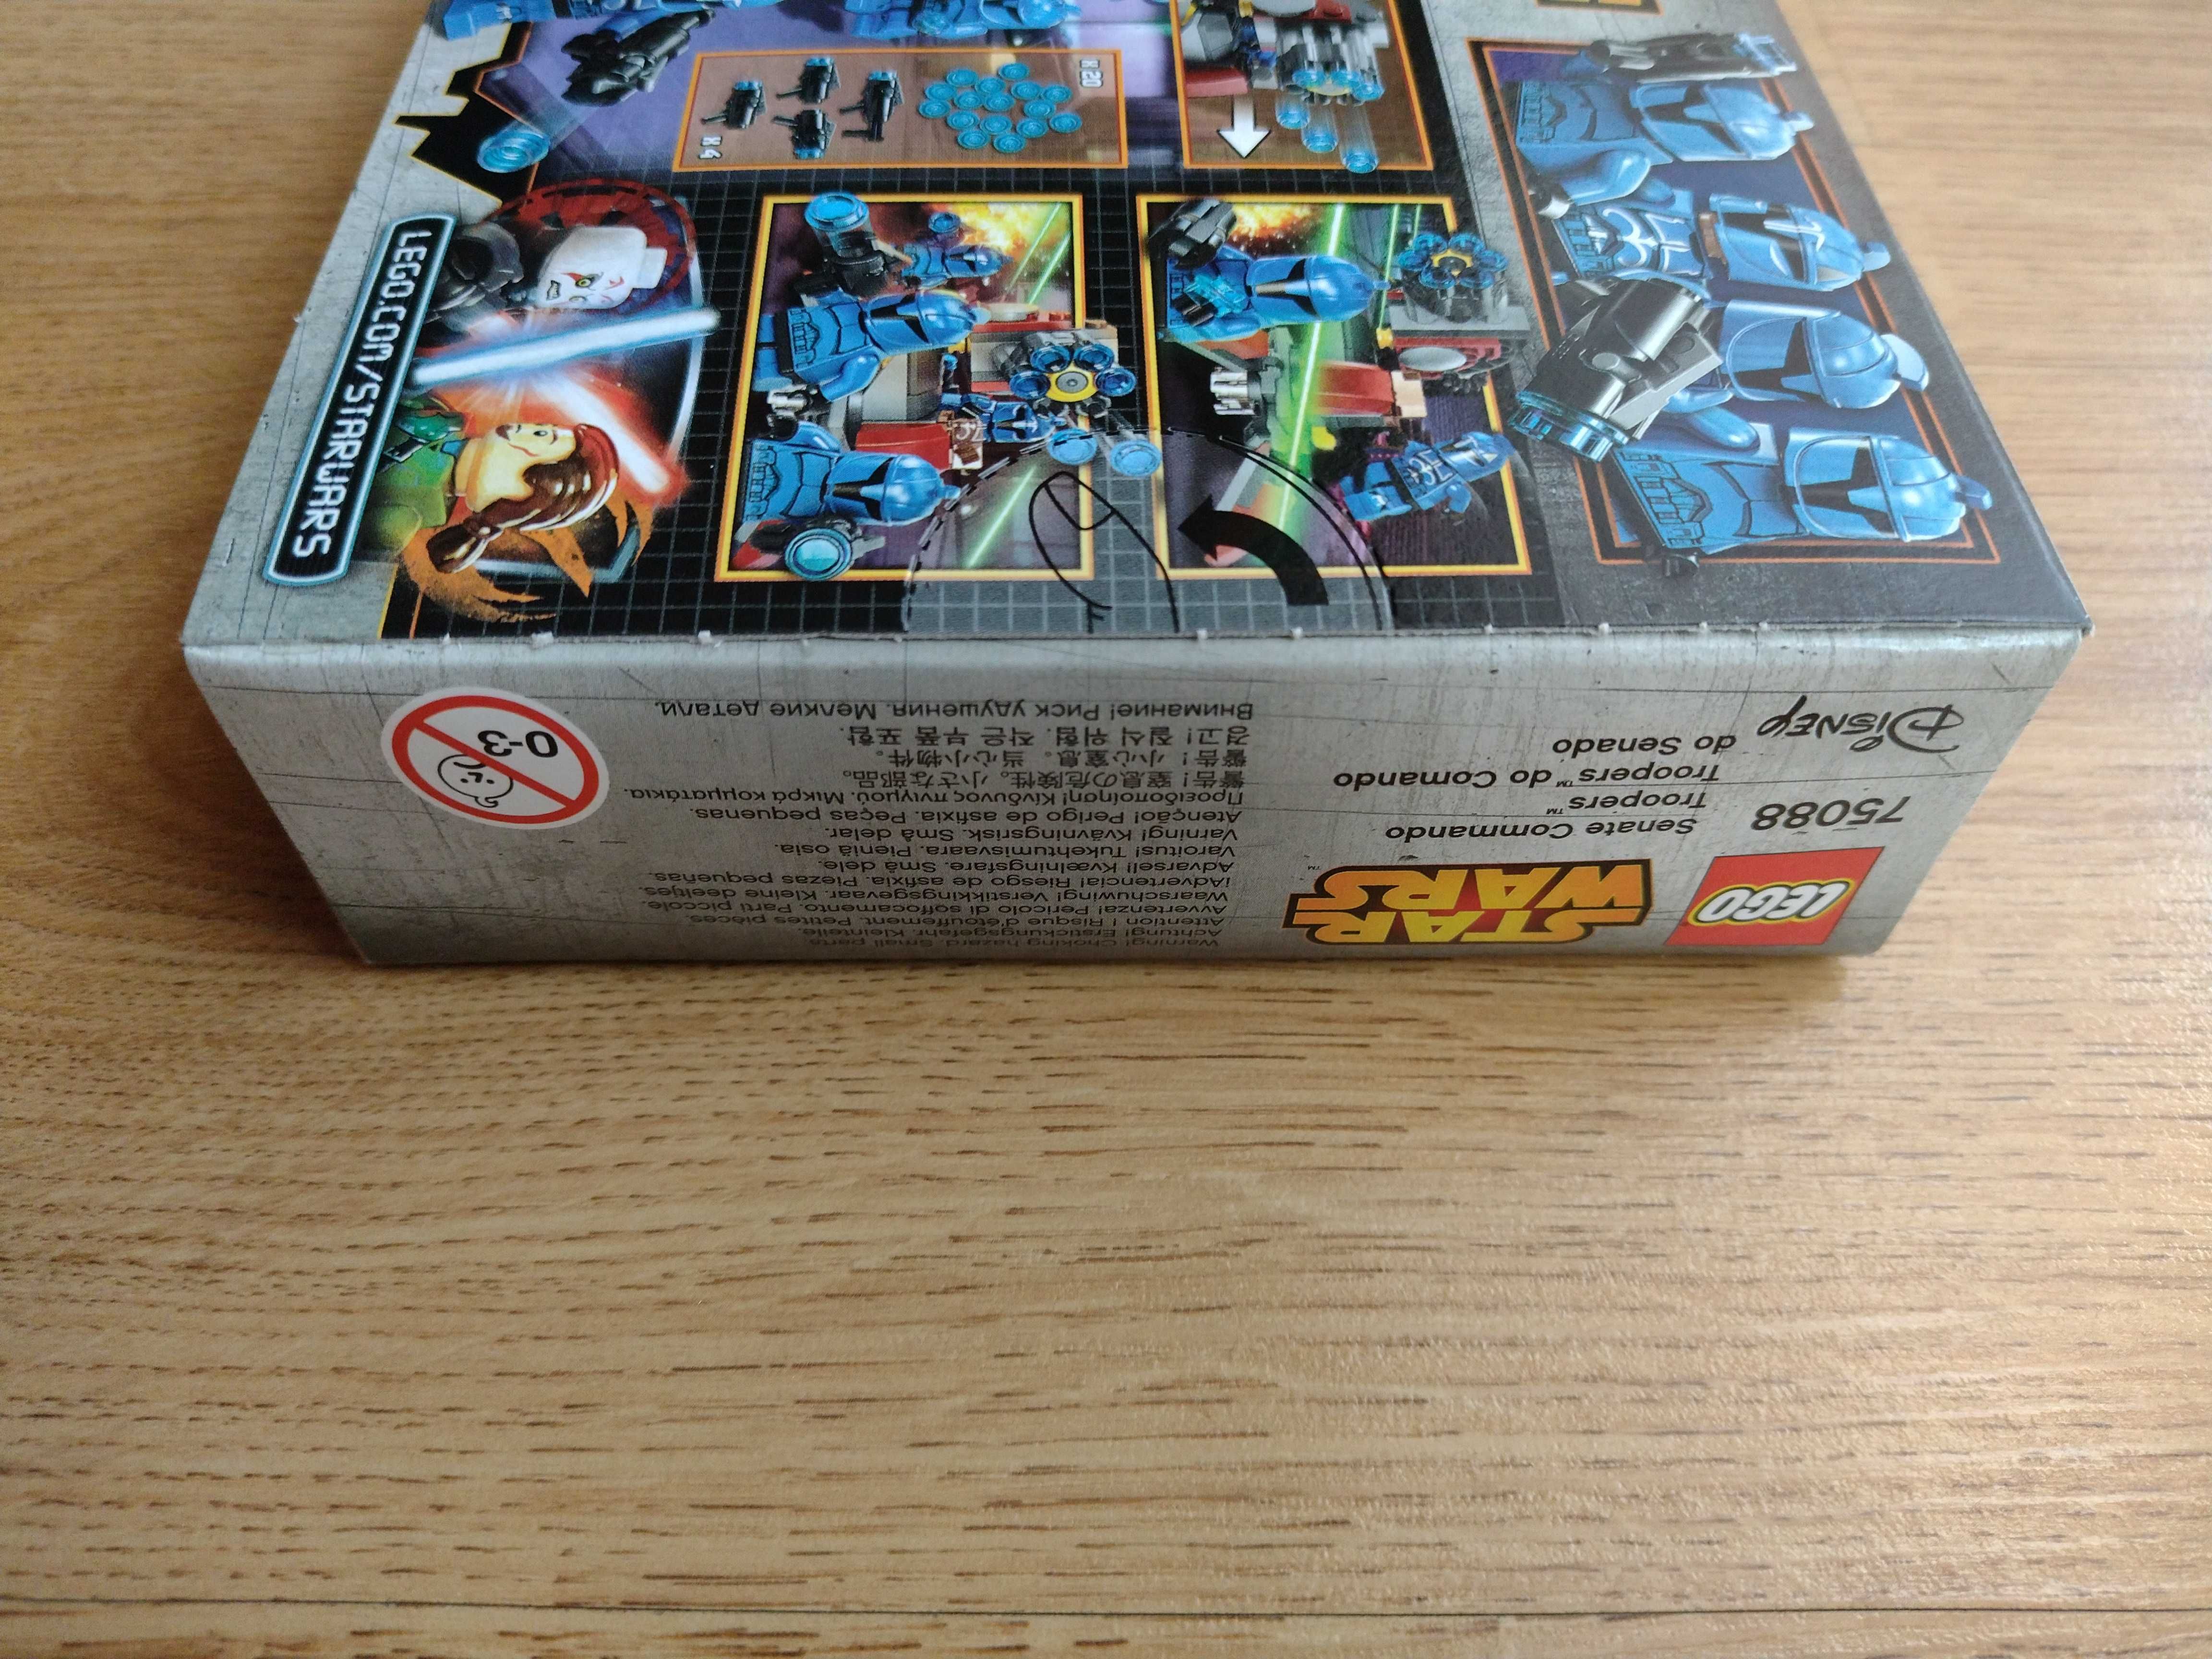 LEGO 75088 Star Wars - Komandosi Senatu